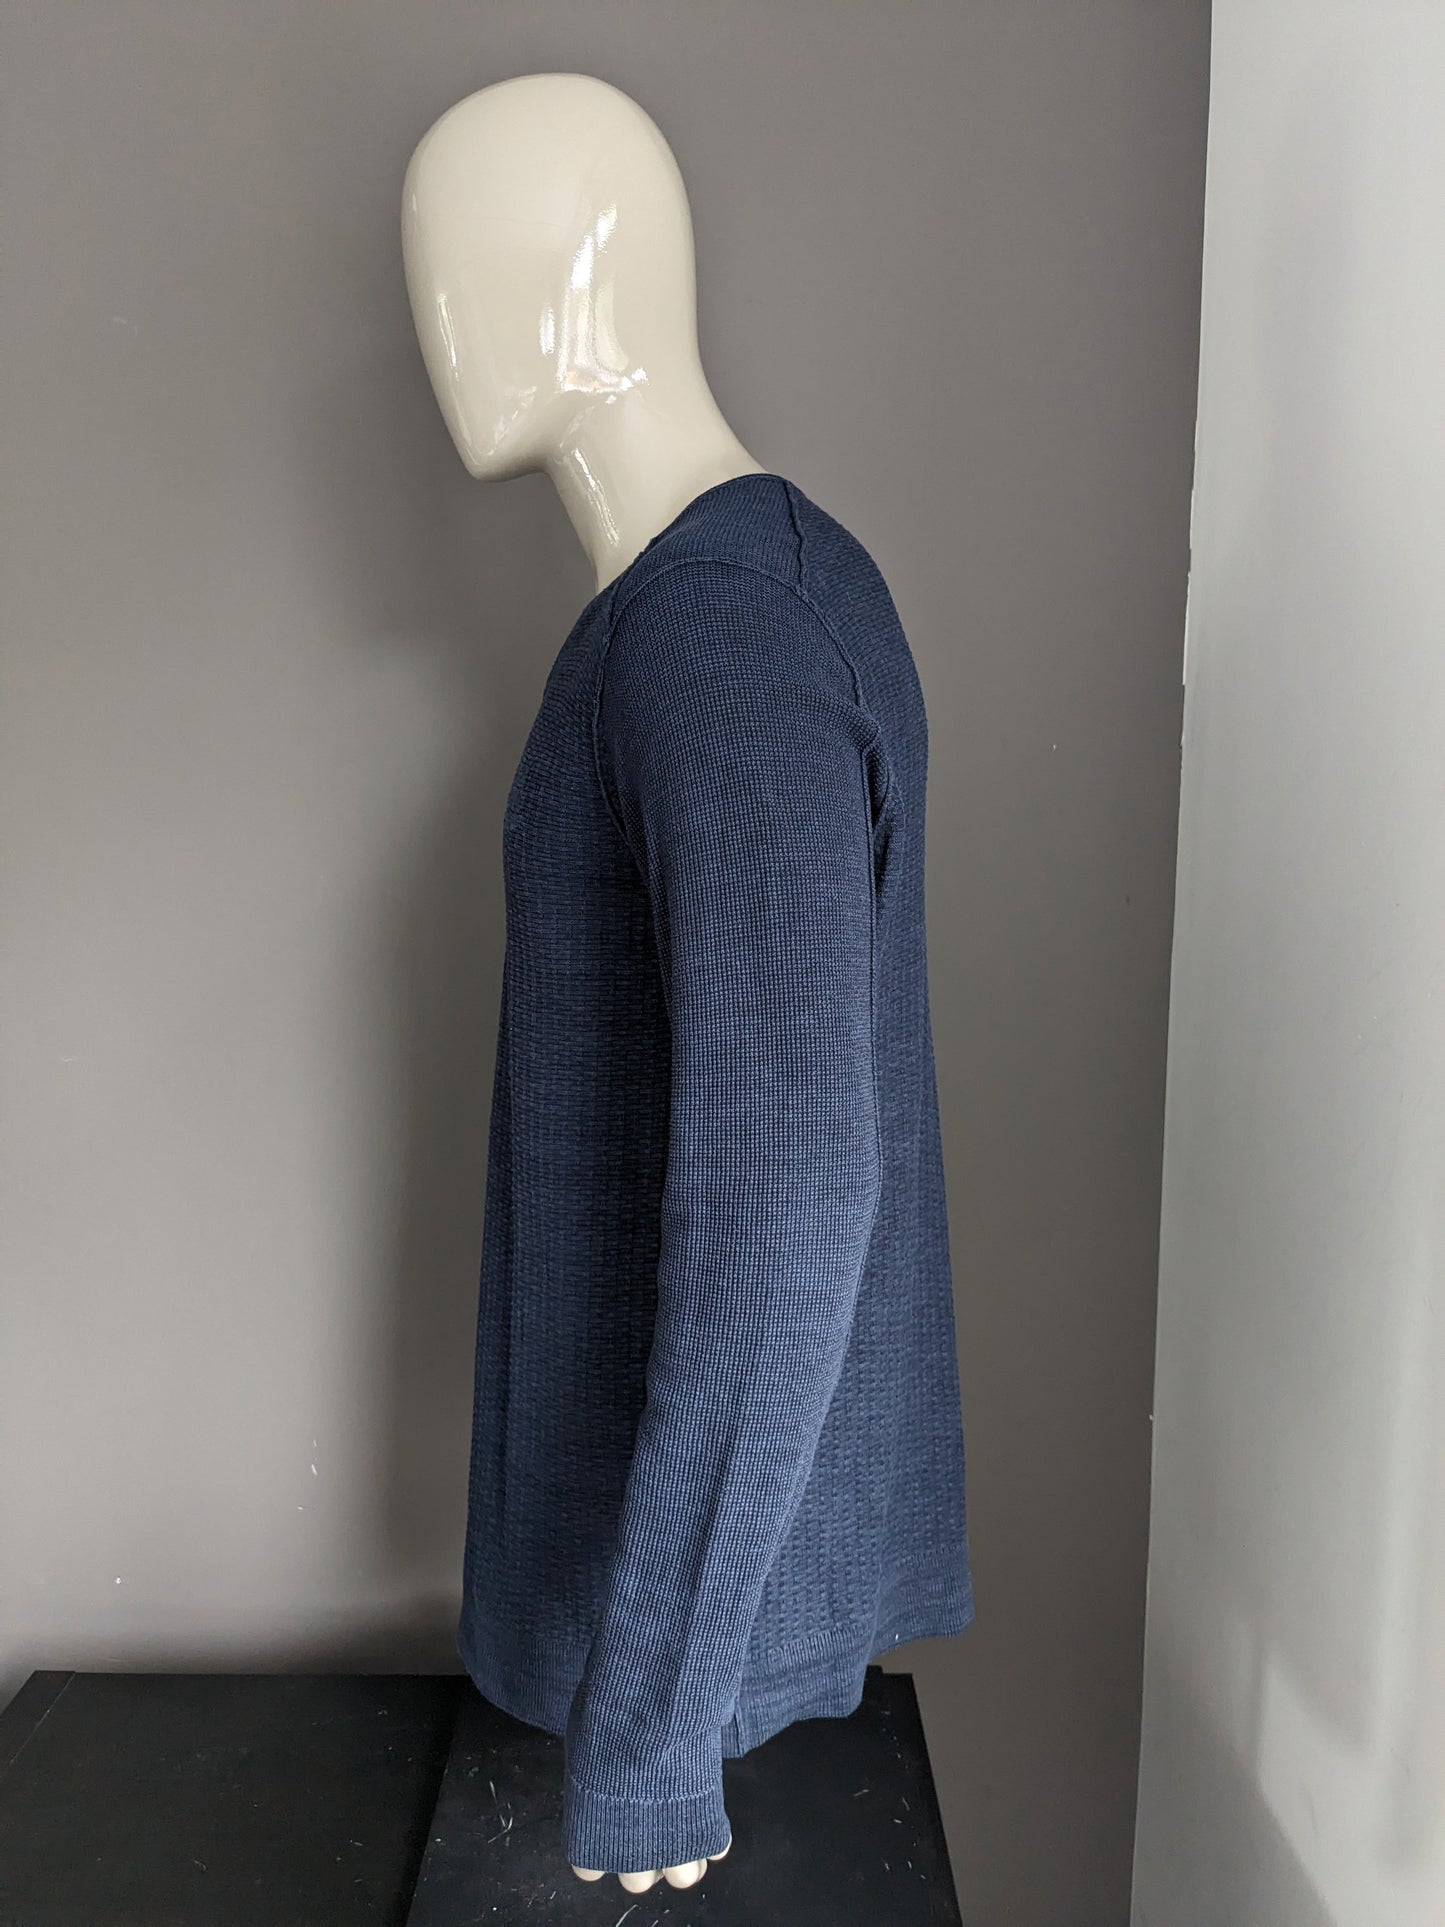 PME Legend sweater with v-neck. Dark Blue tactile motif. Size XL.